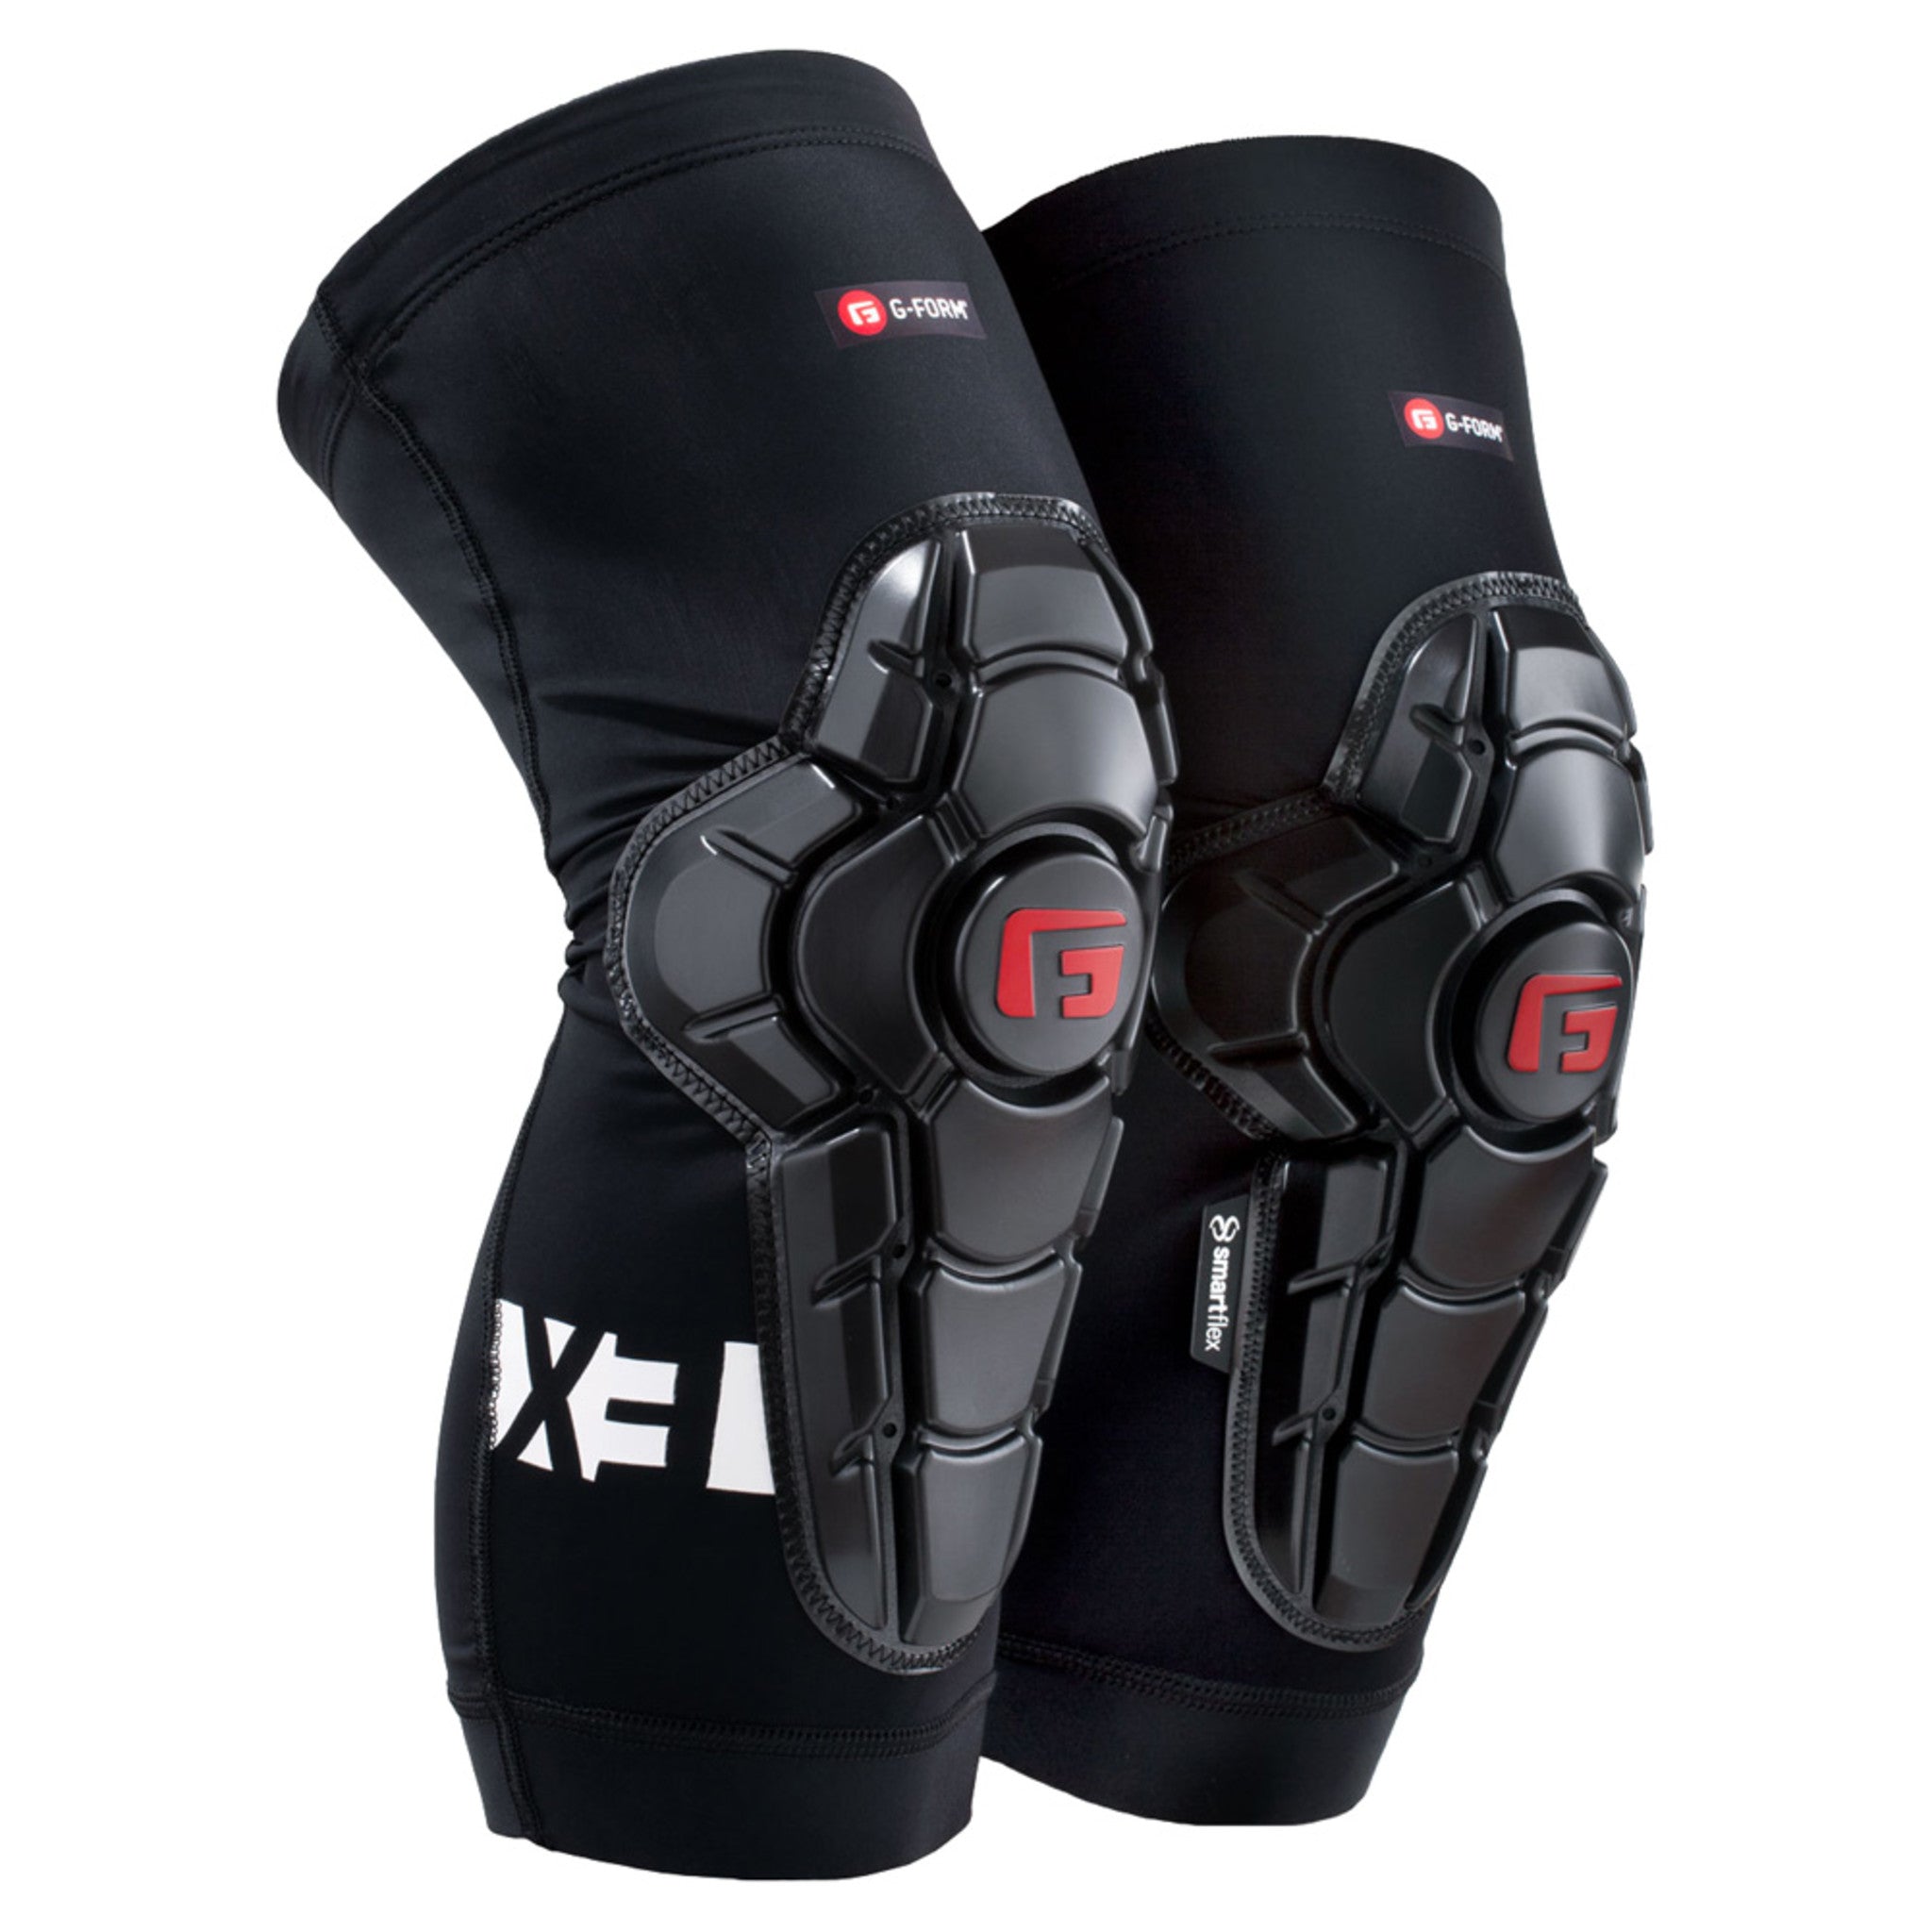 Protège-genoux Pro-X3 - G-Form - Taille S